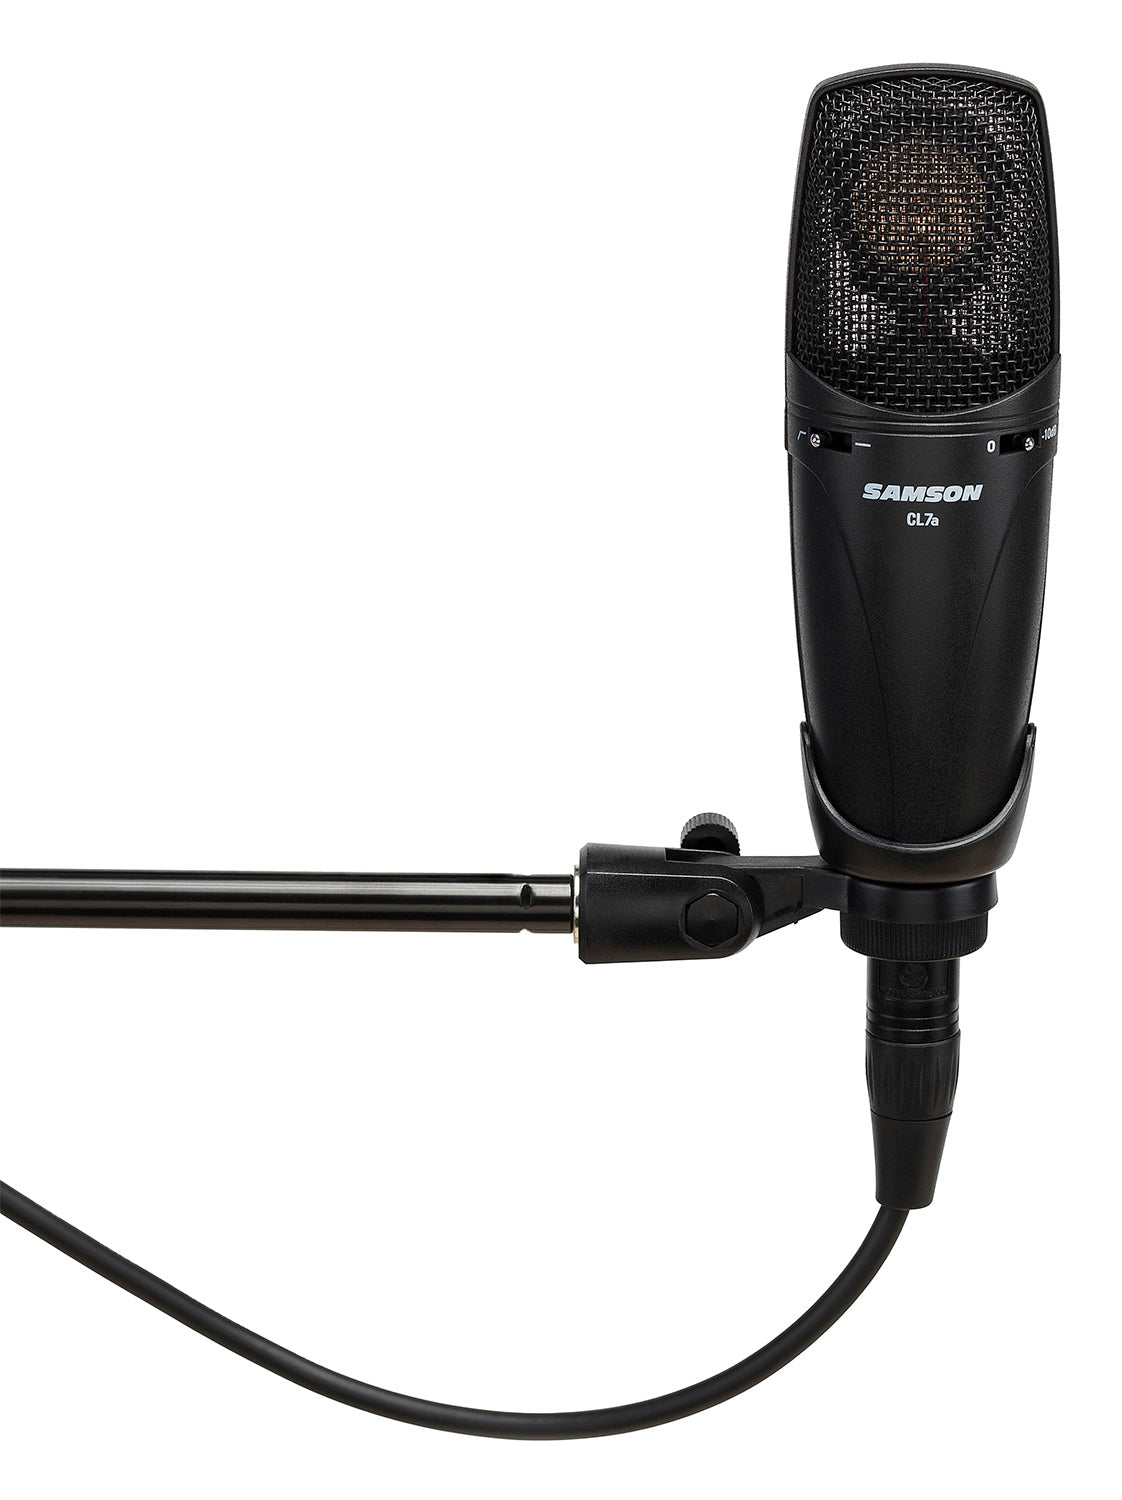 Samson CL7a Large Diaphragm Studio Condenser Microphone - Hollywood DJ